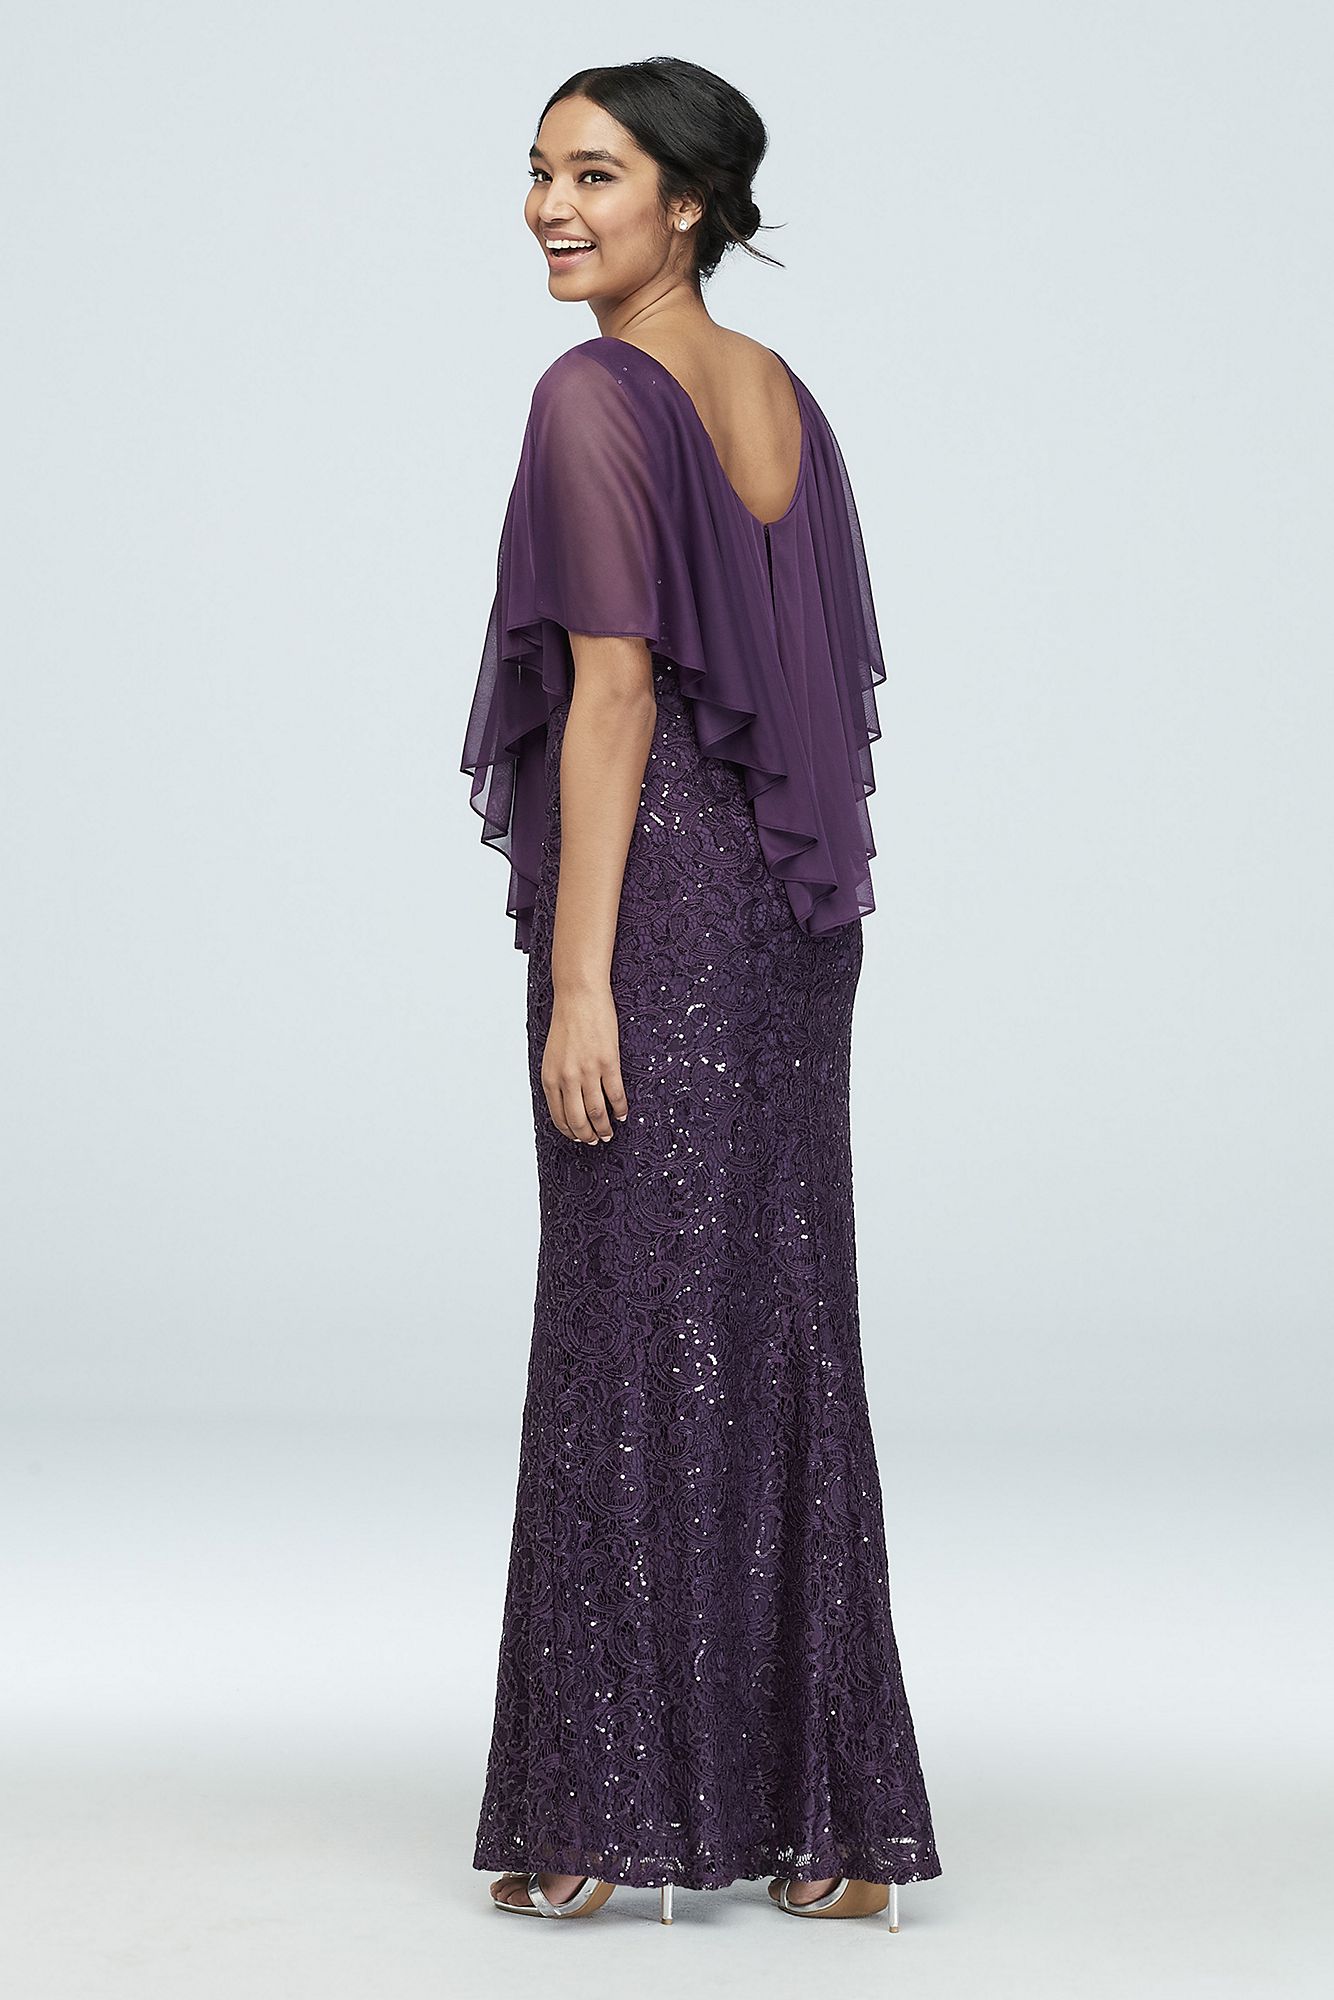 Sequin Lace Gown with Cold Shoulder Capelet 263842D